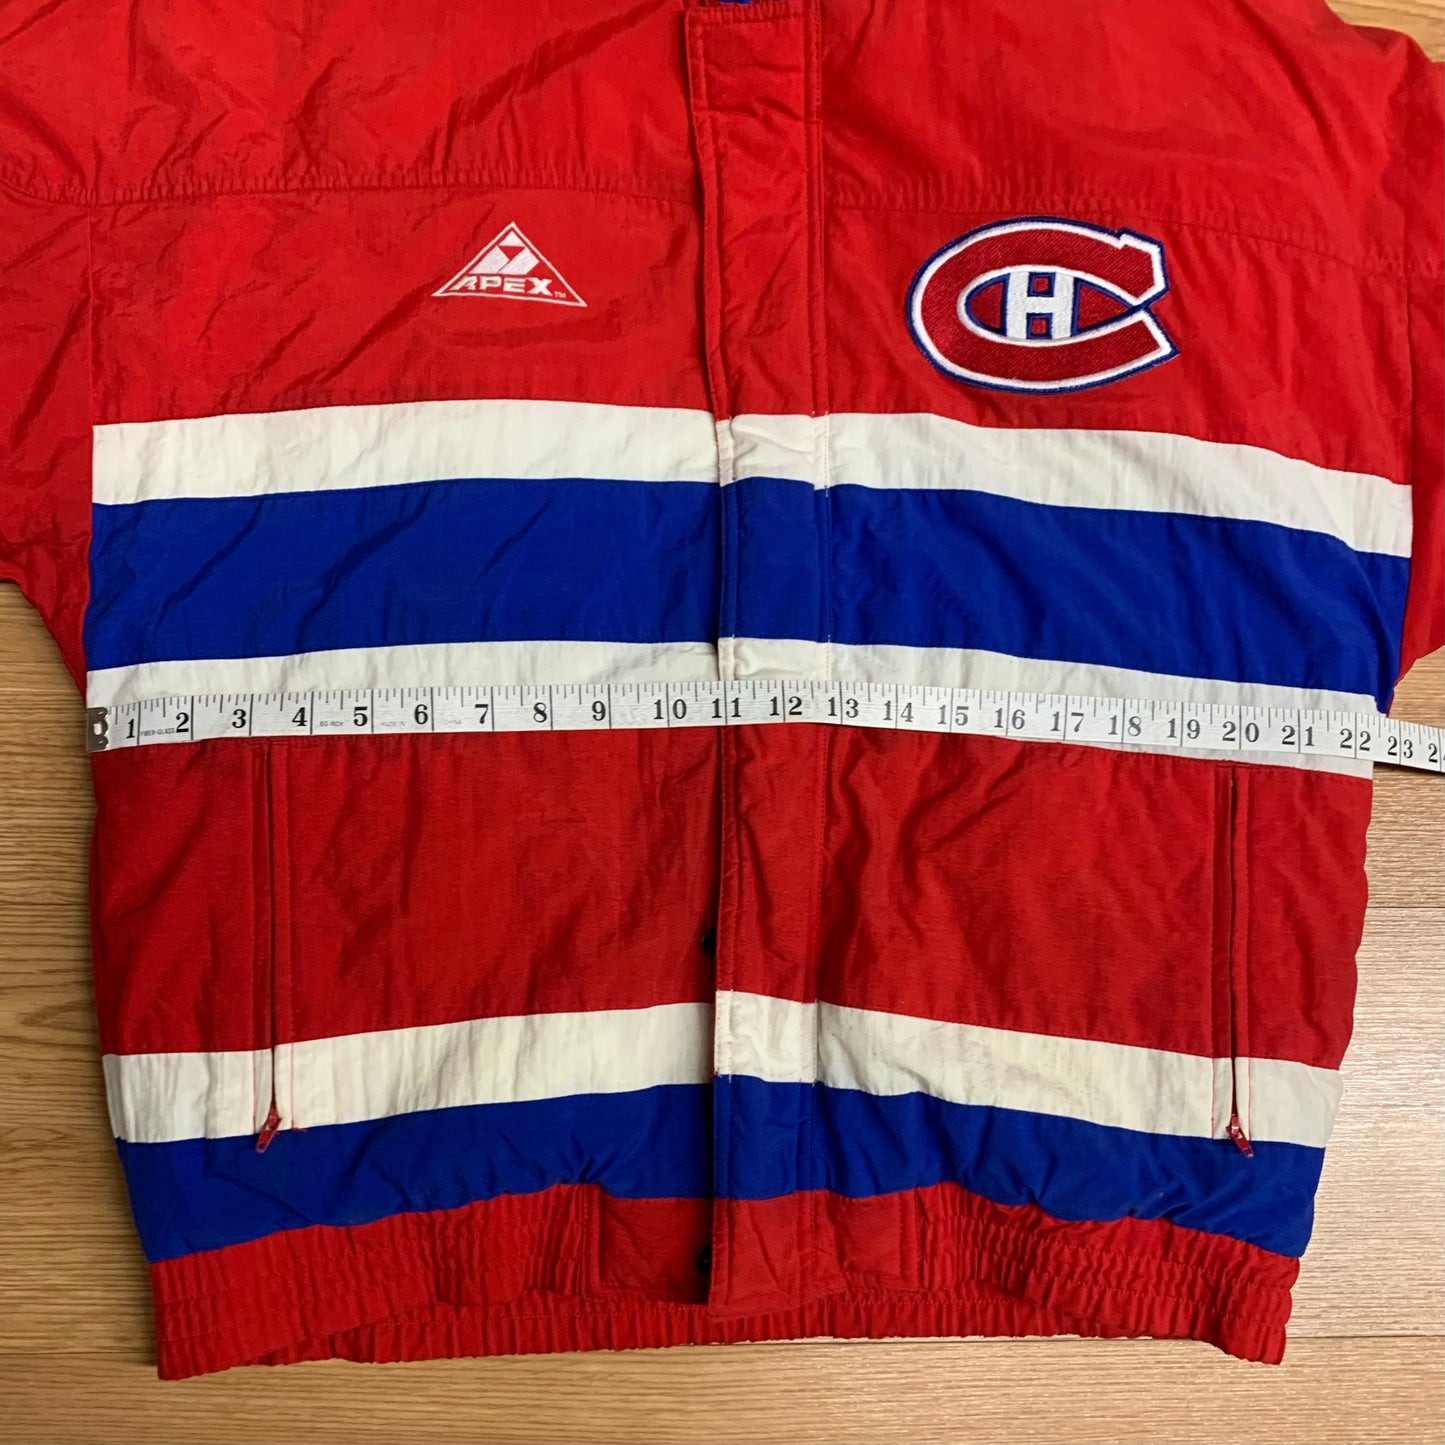 Apex Montreal Canadiens S